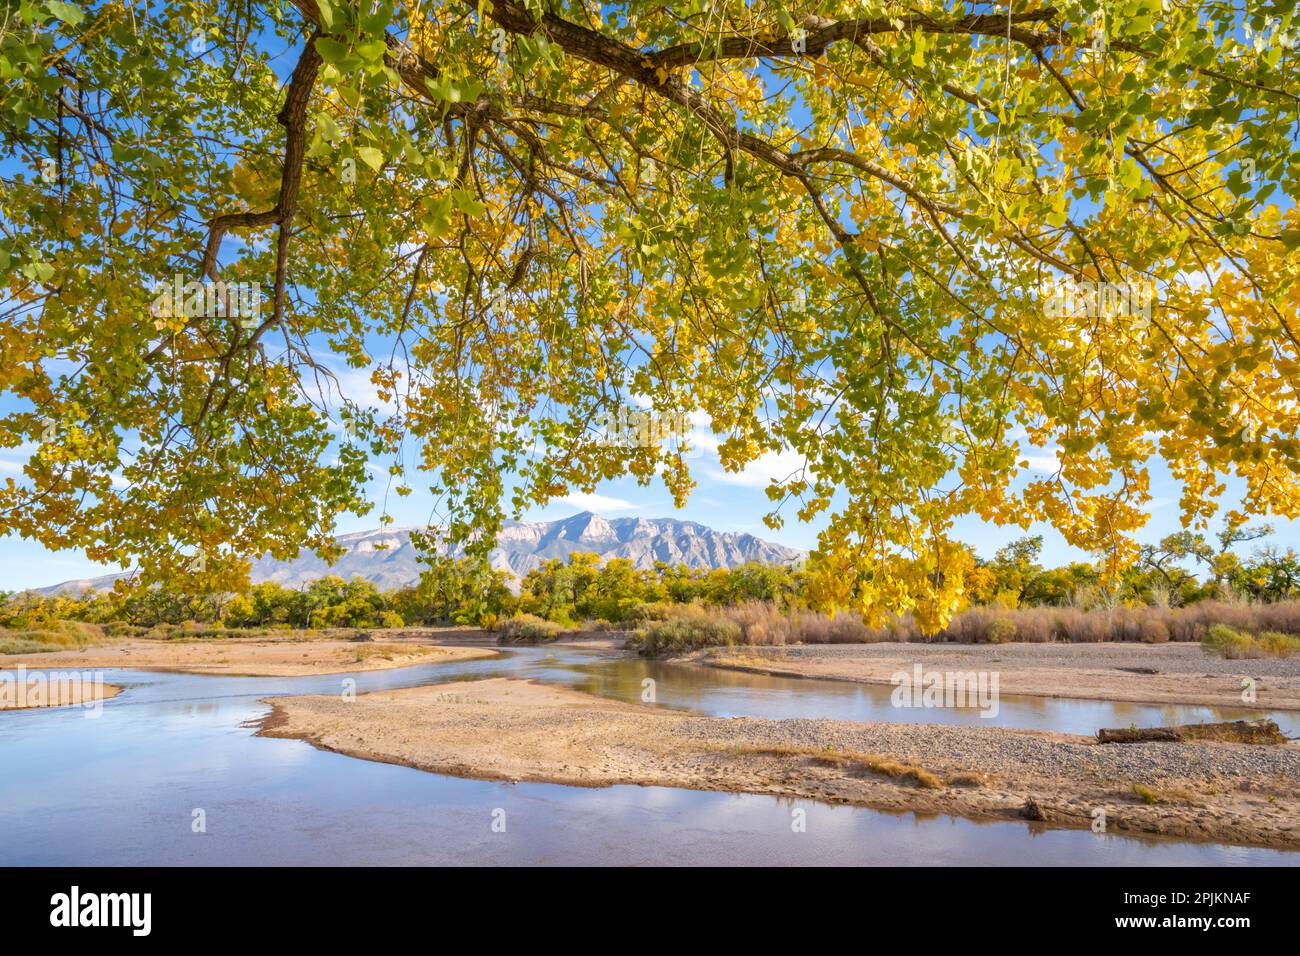 USA, New Mexico, Sandoval County. Sandia Mountains und Rio Grande River im Herbst. Stockfoto